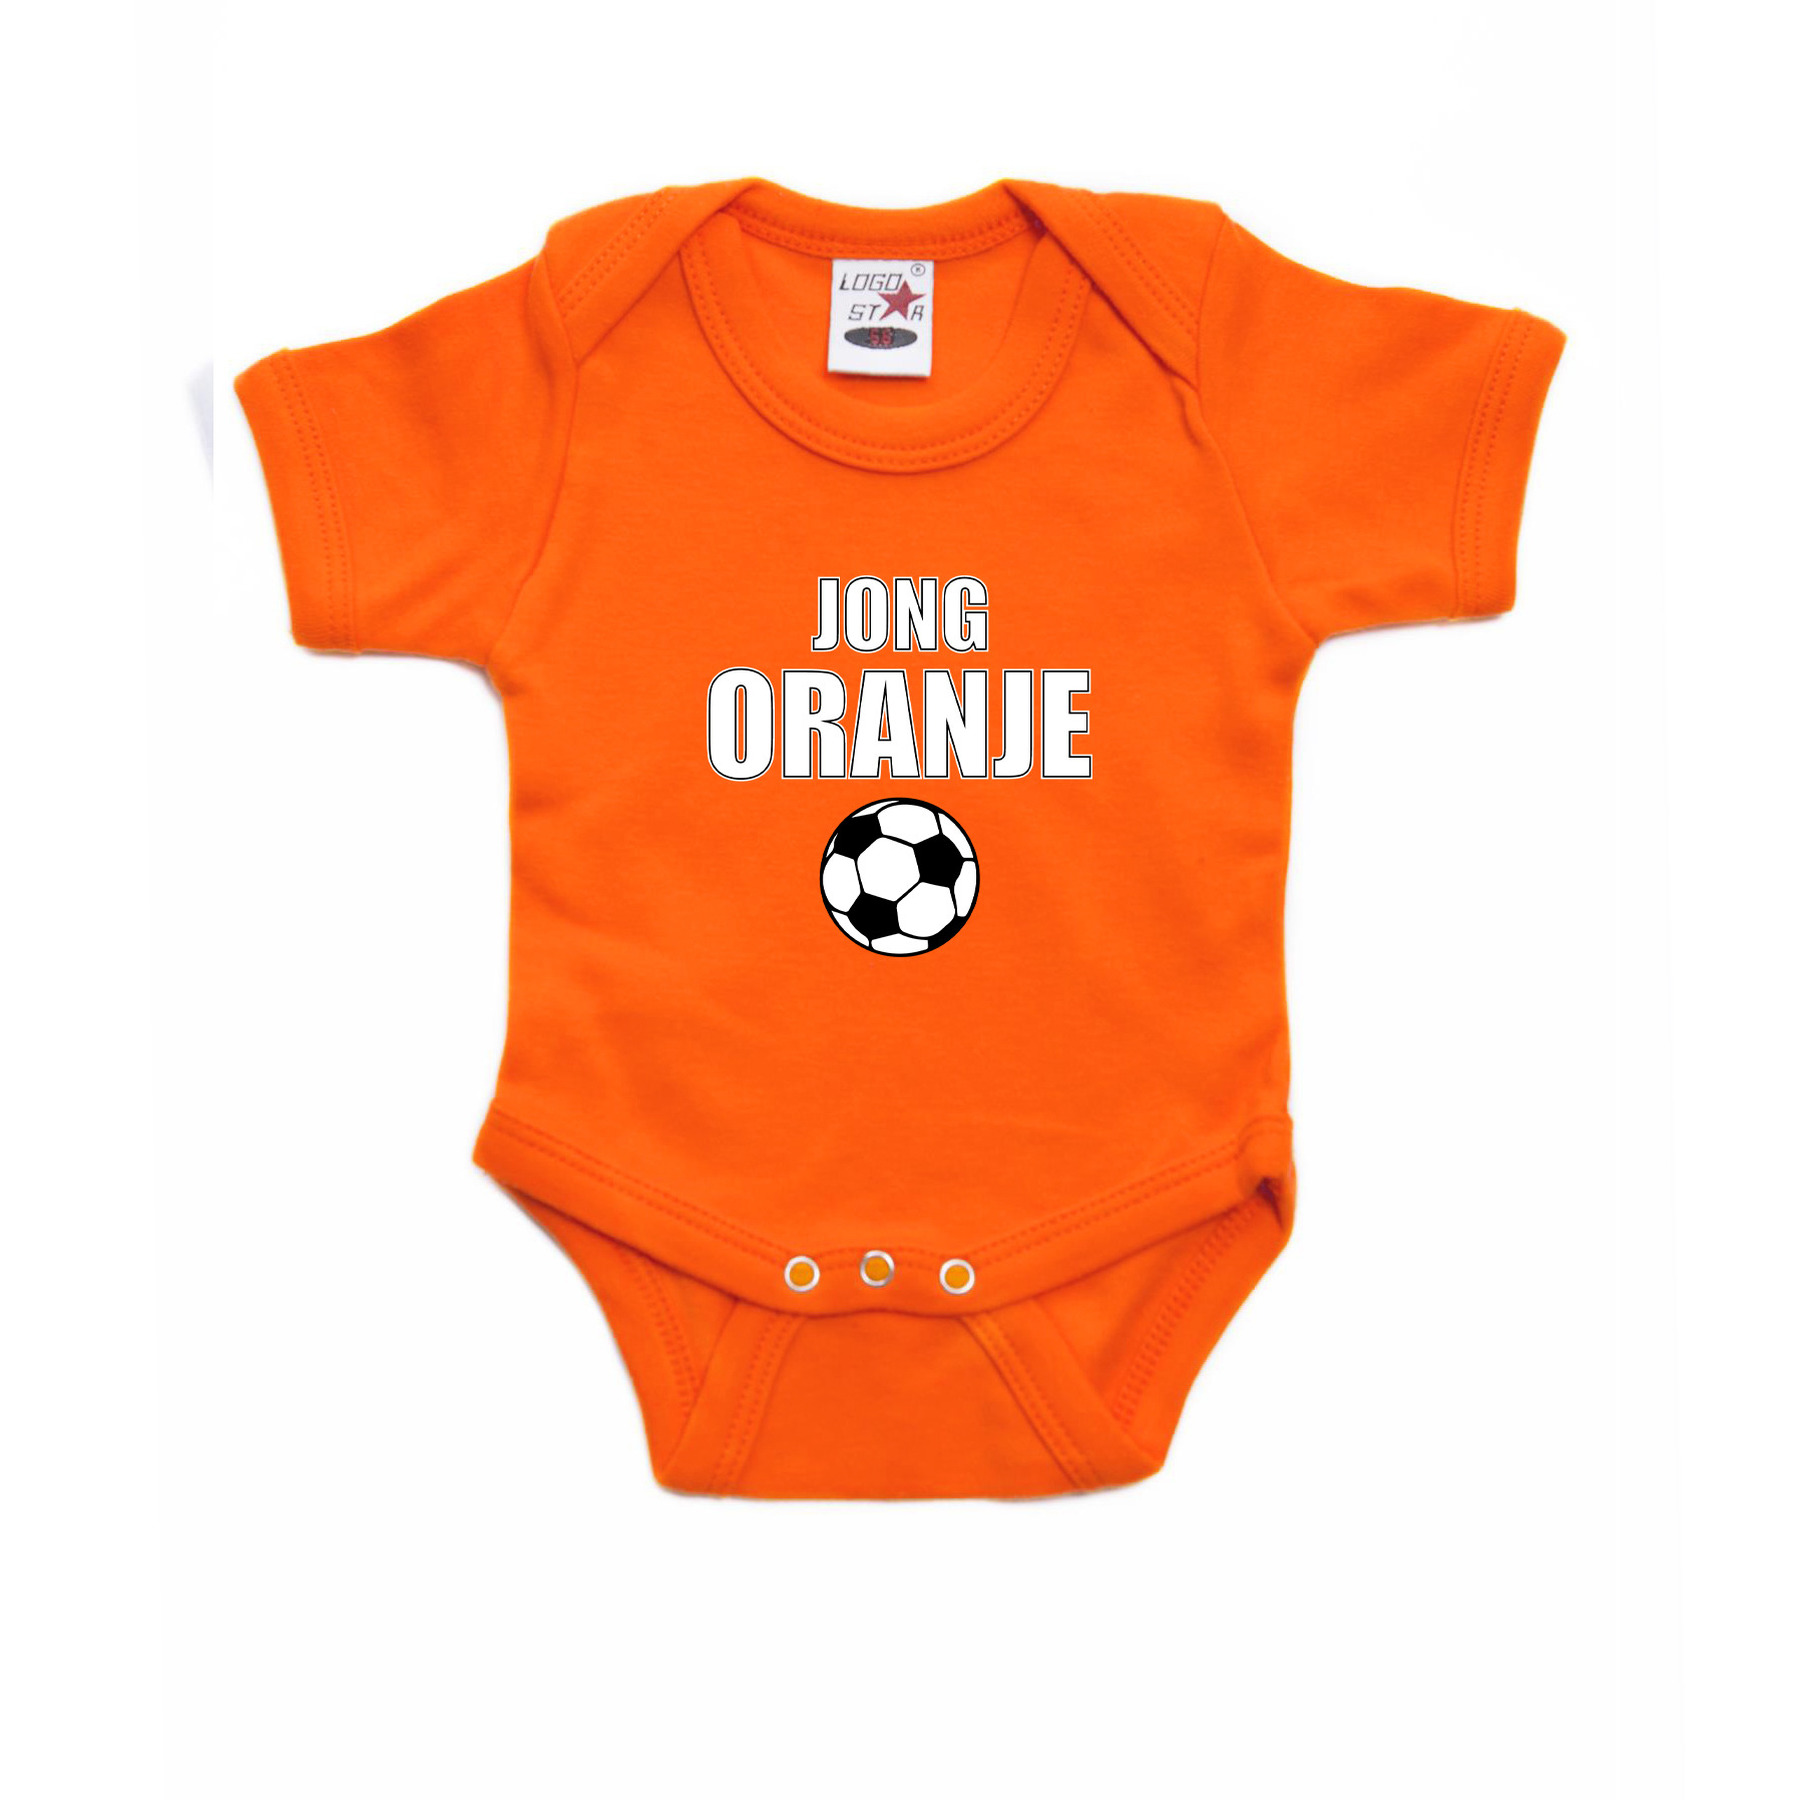 Oranje romper jong oranje Holland - Nederland supporter voor babys